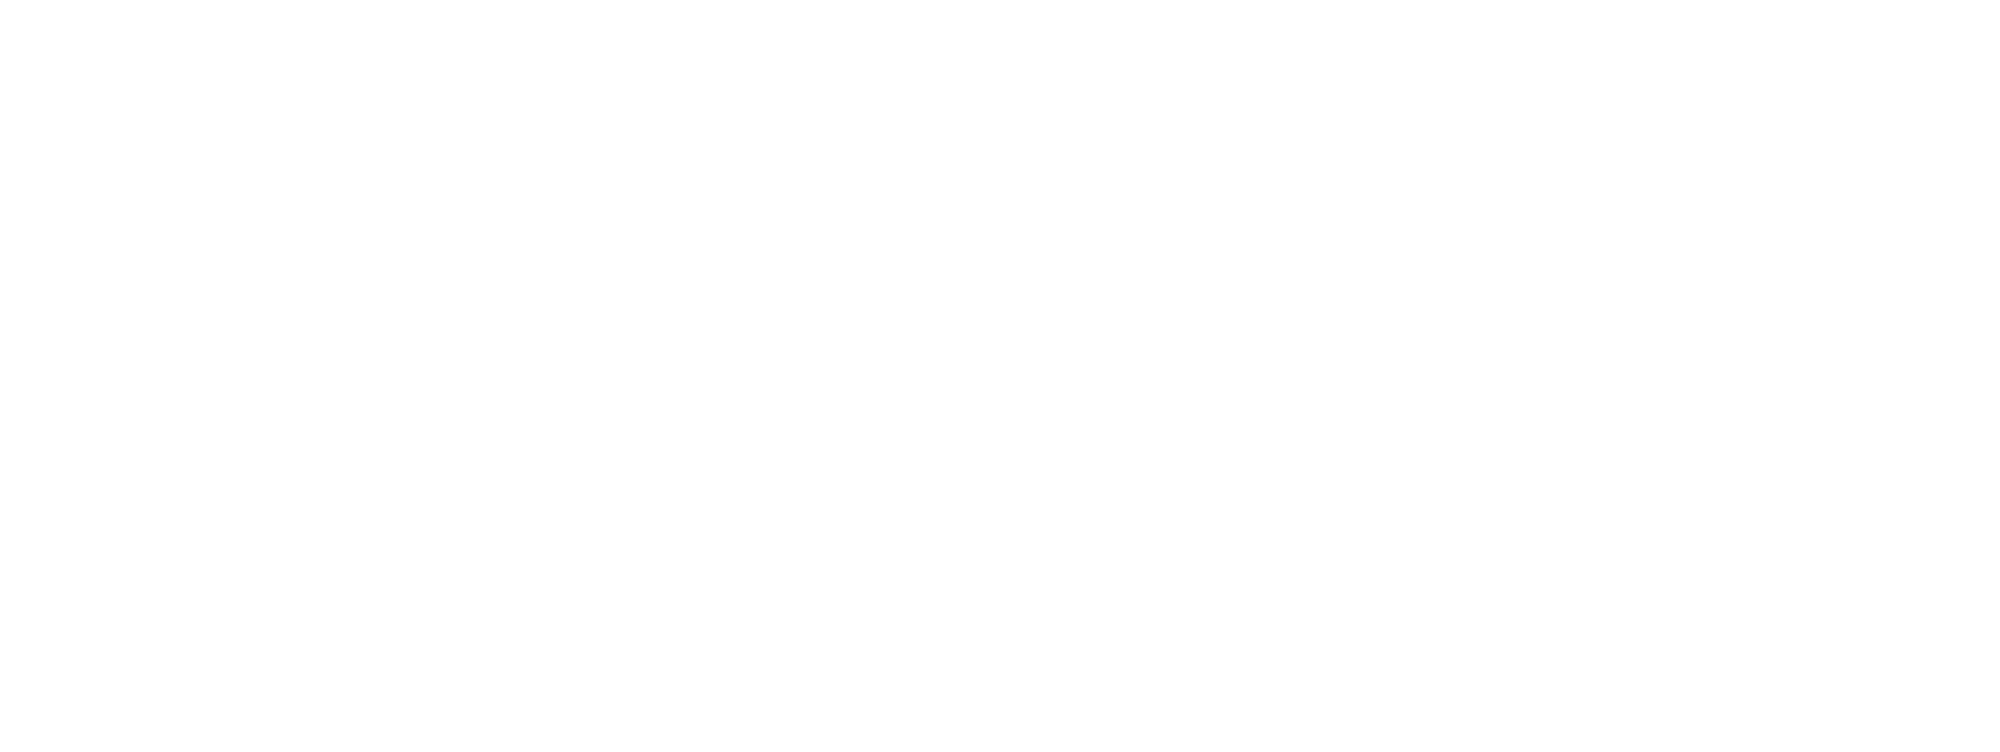 Anfield Shop